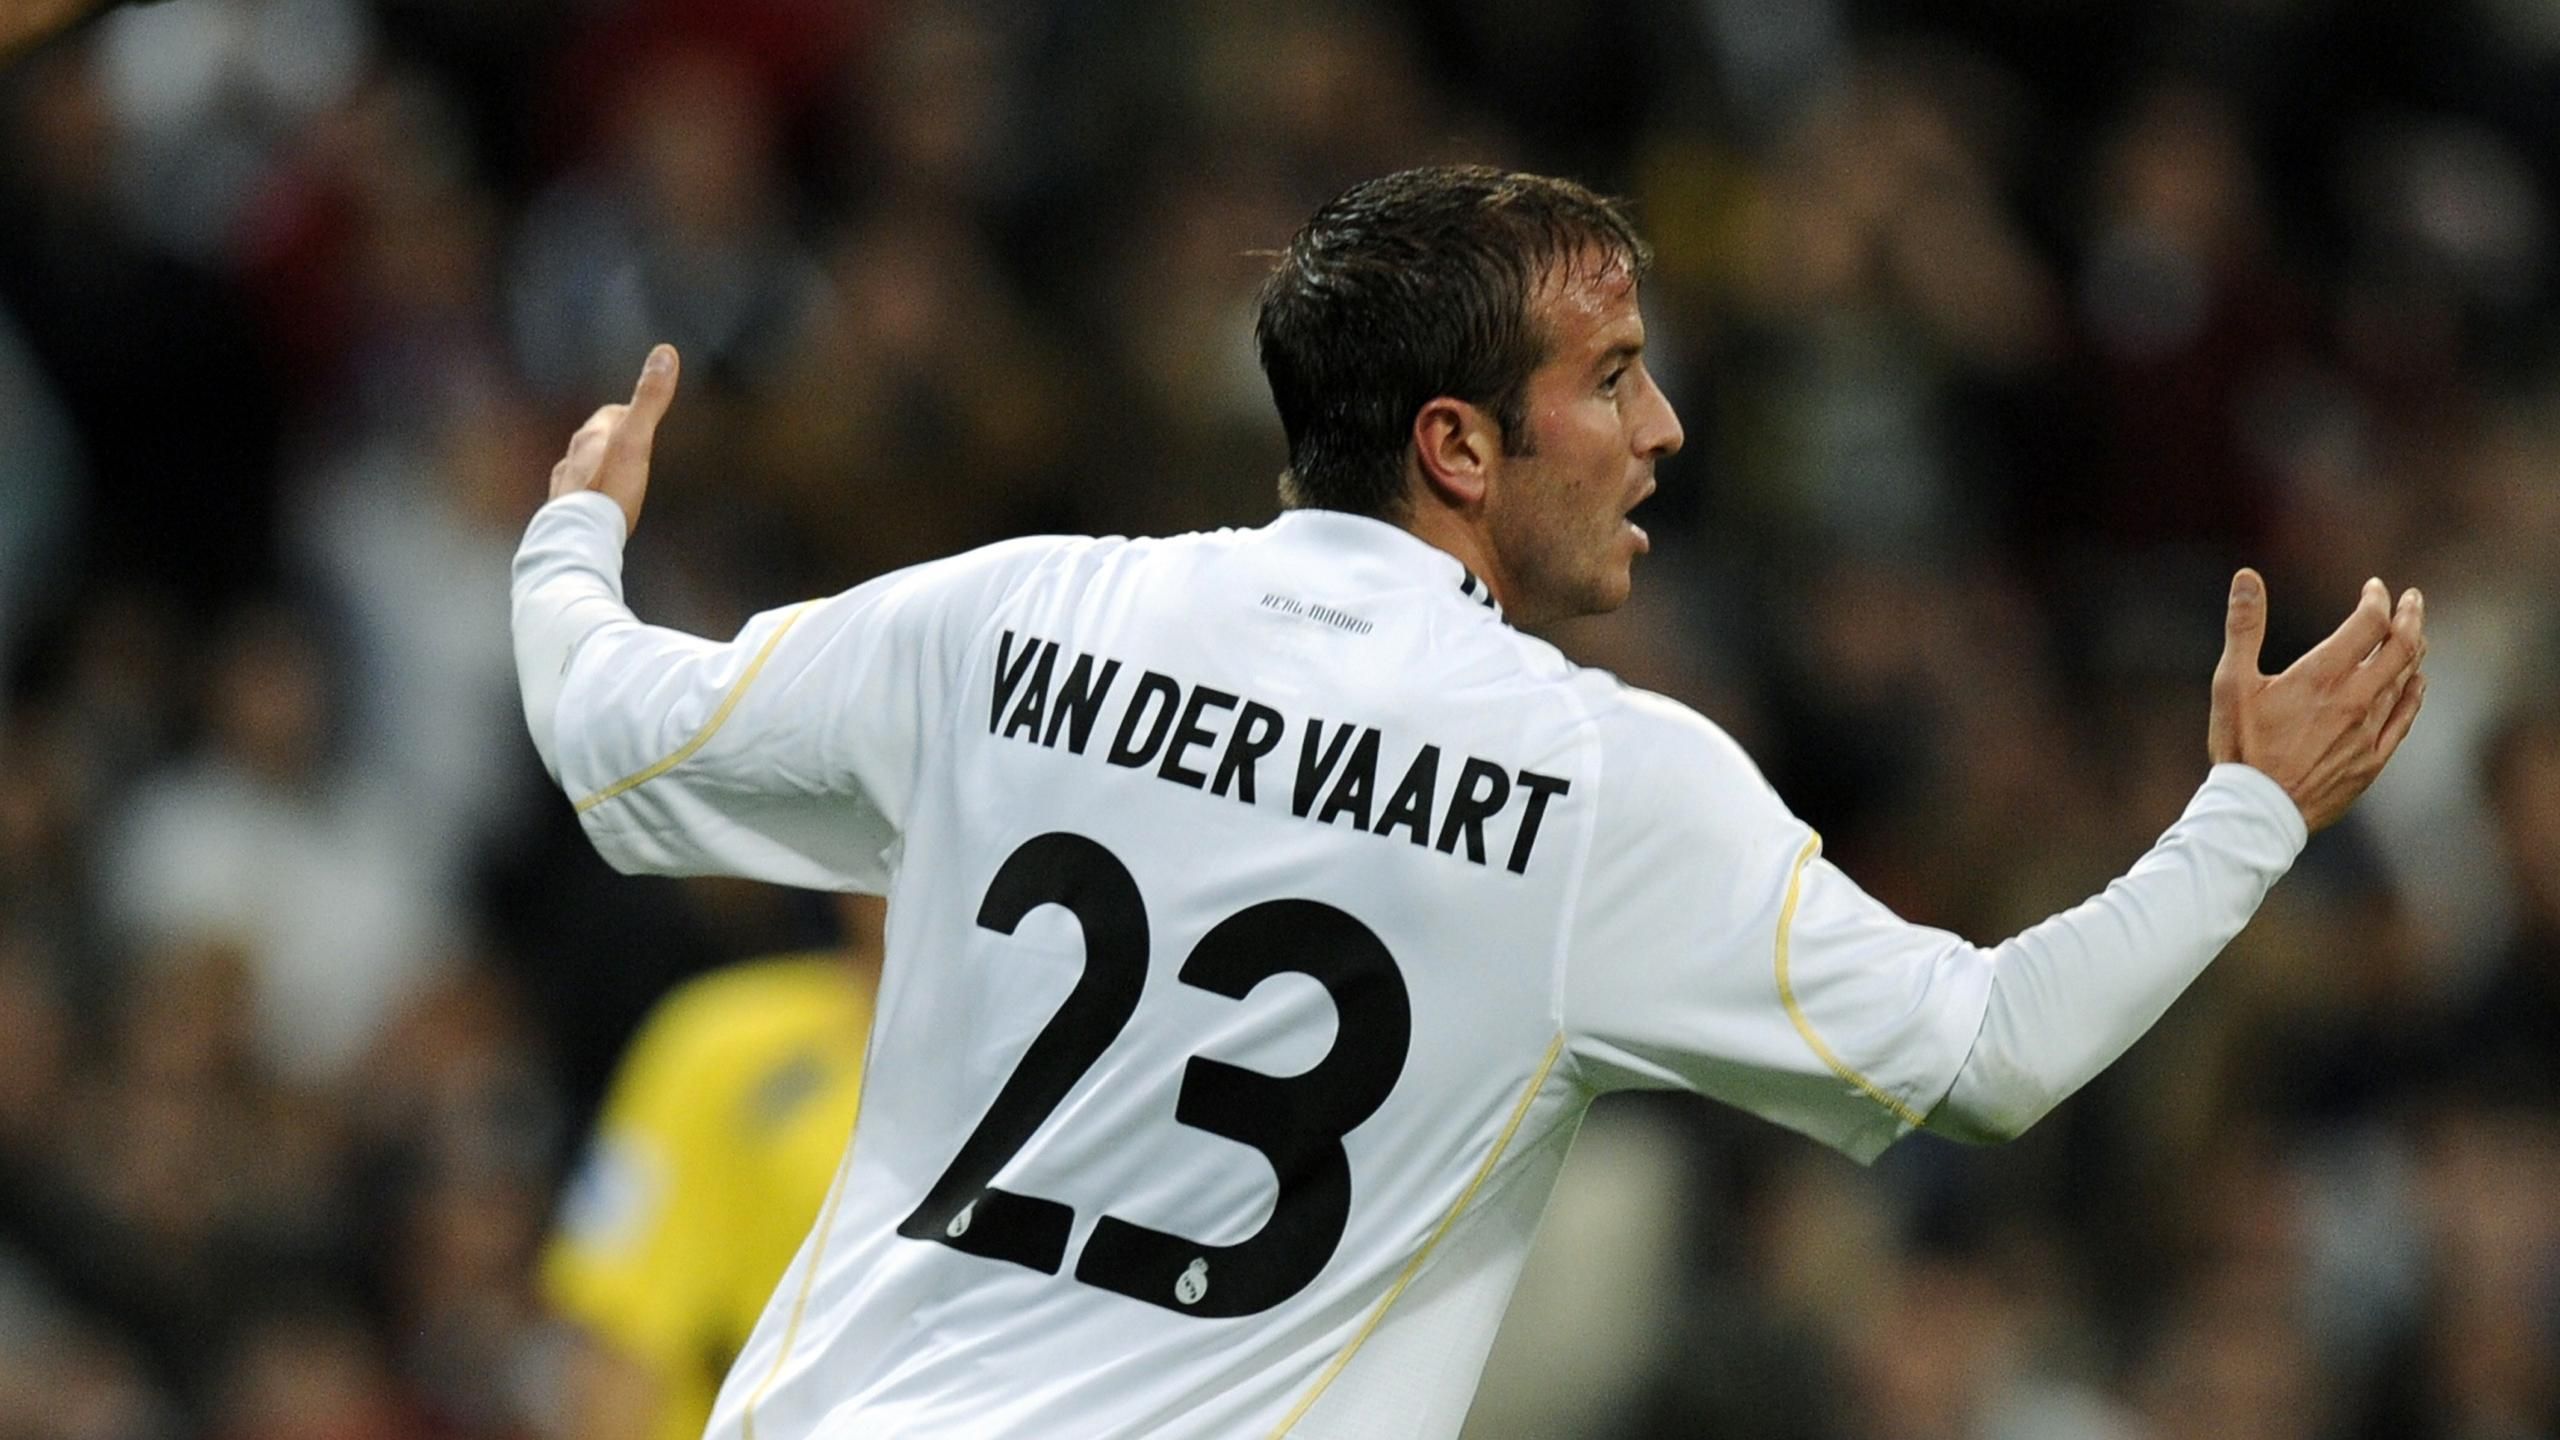 I never even considered a transfer' - Van der Vaart reveals